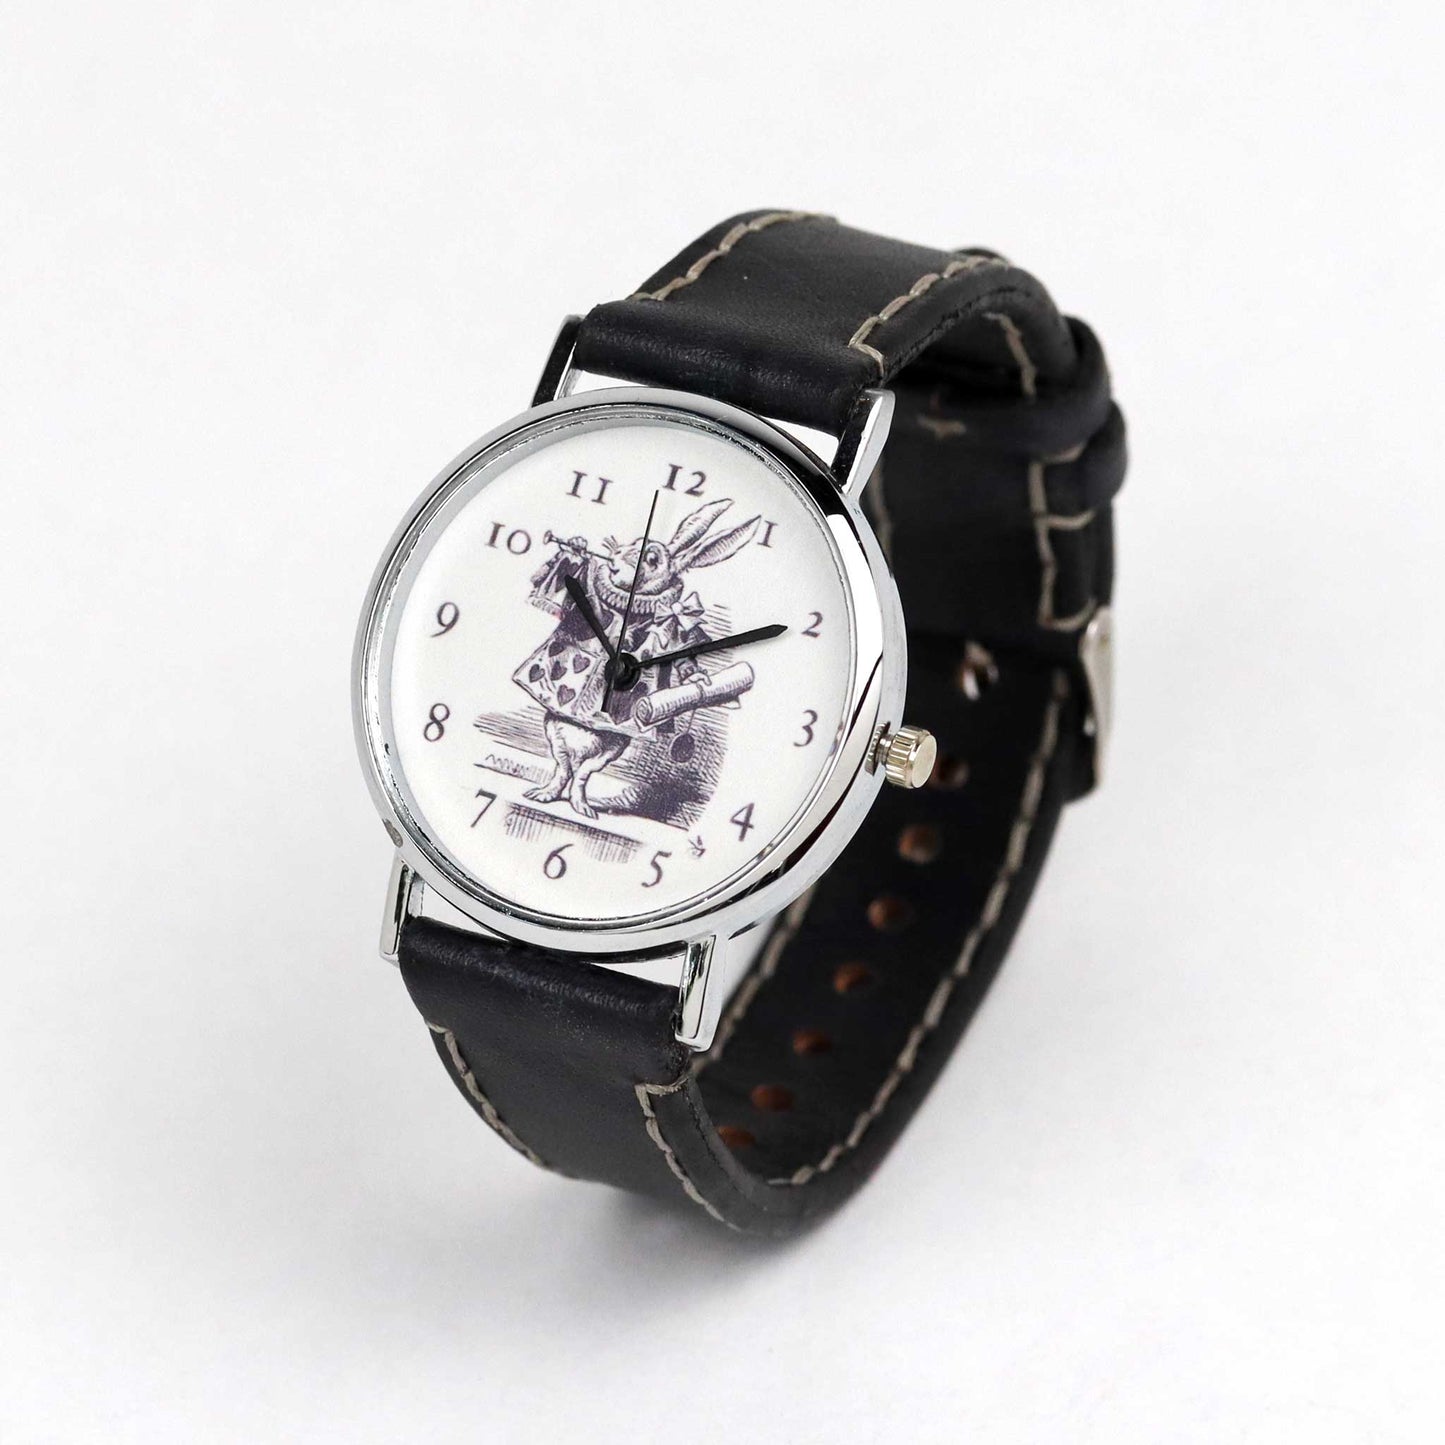 White Rabbit wrist watch with a black strap